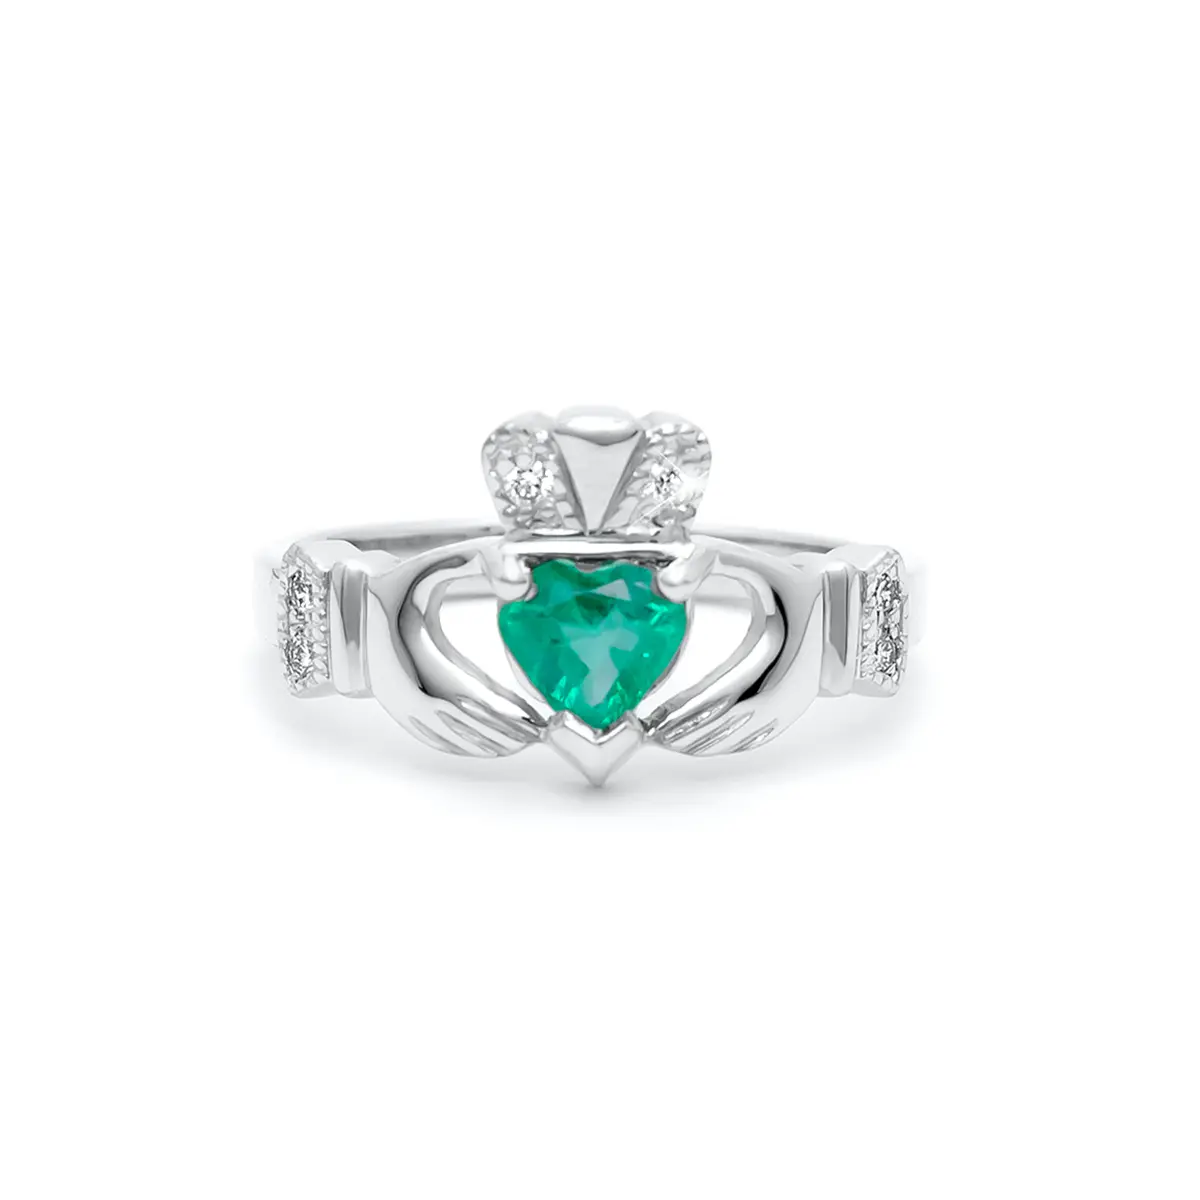 Irish Designed Emerald And Diamond Claddagh Engagement Ring. Total Emerald Carat 0.55